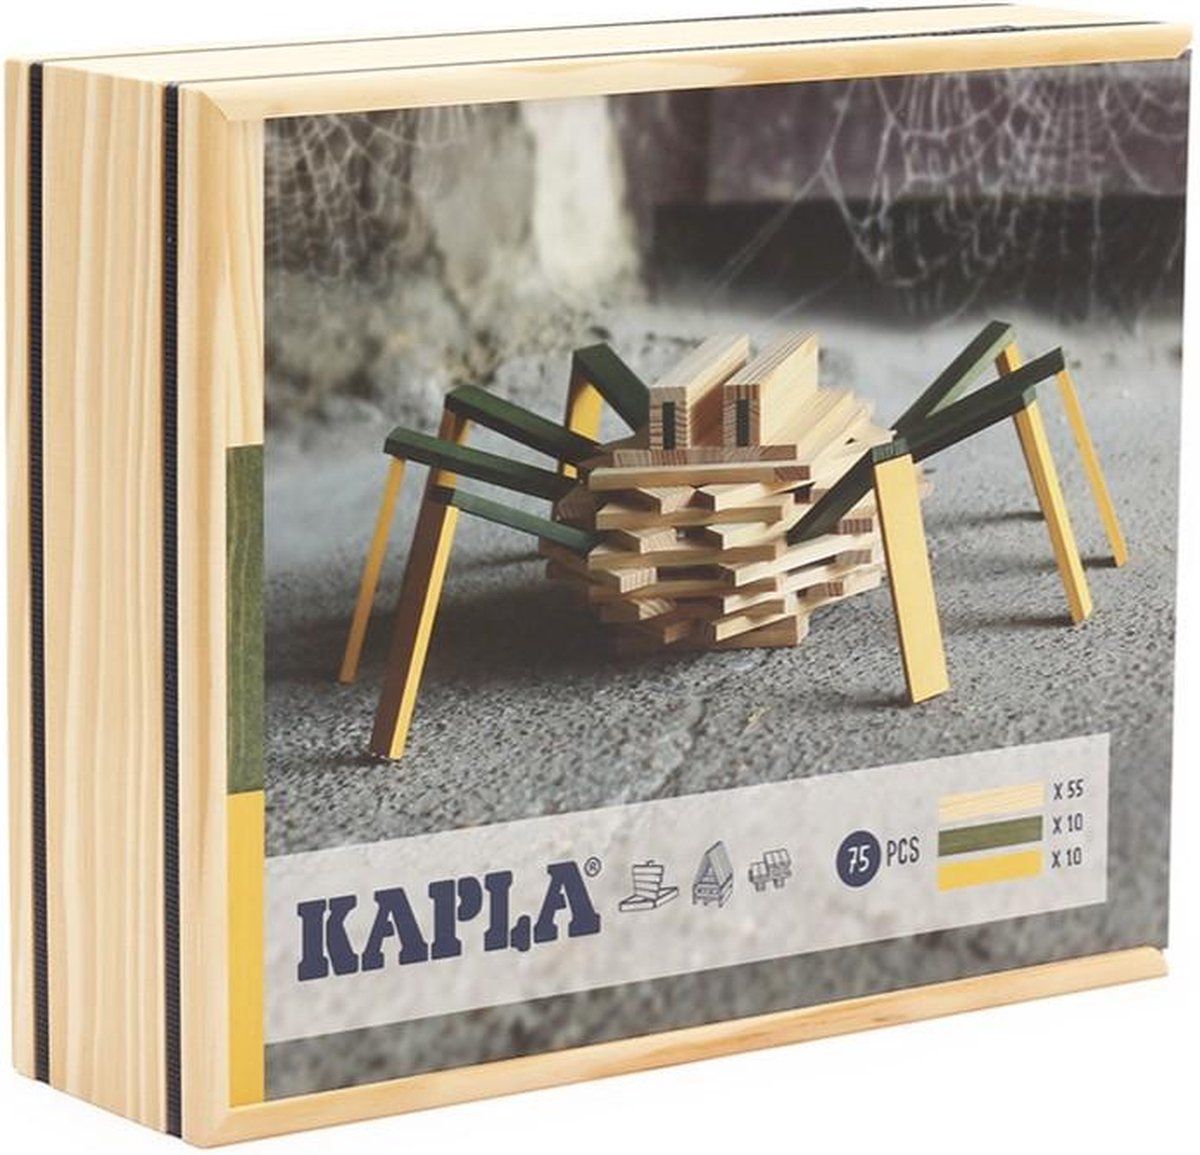 kapla-kapla-kleur-constructiespeelgoed-spin-koffer-75-plankjes-nl